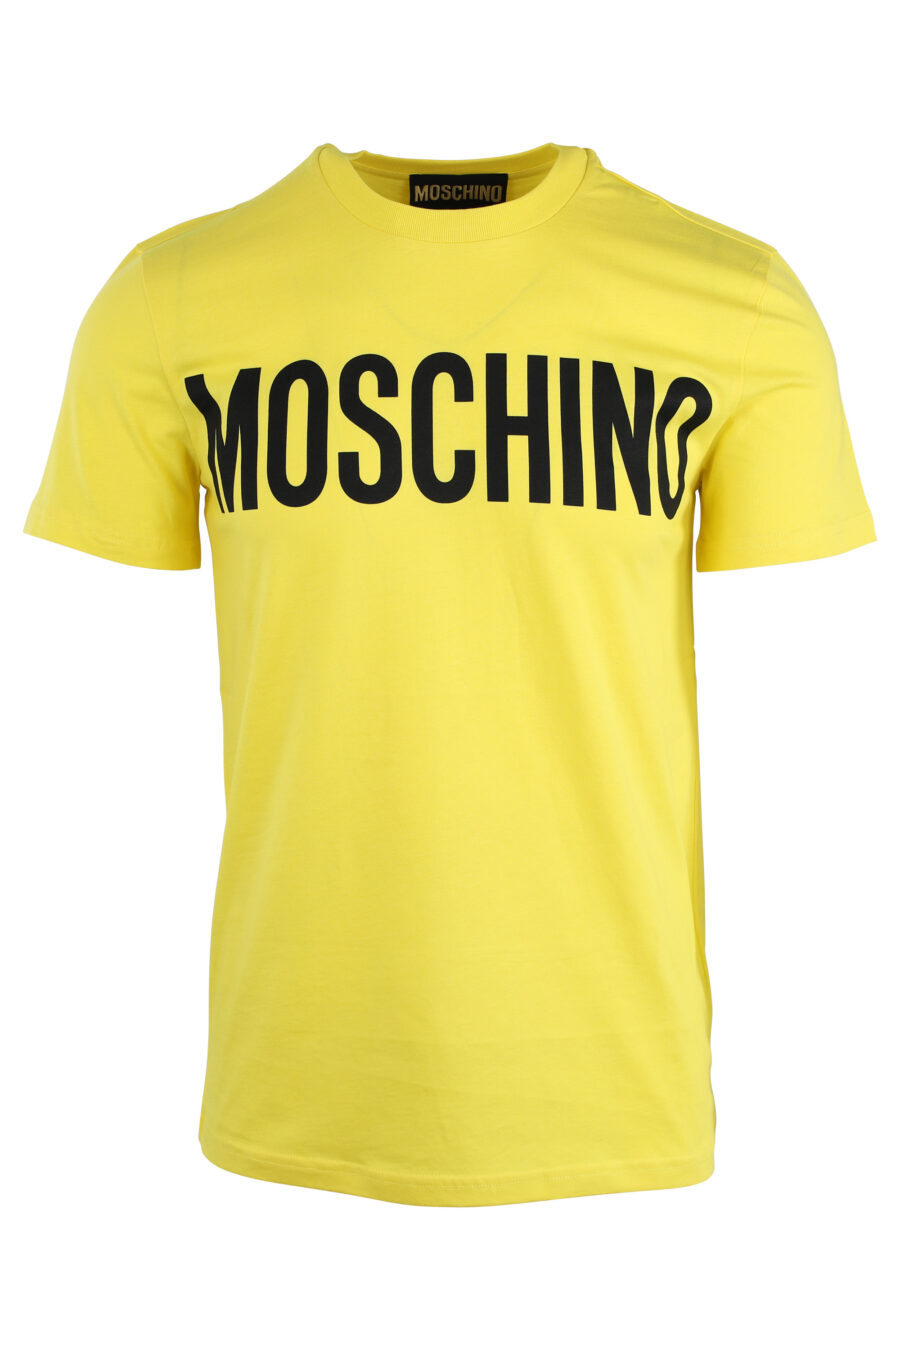 Camiseta amarilla con maxilogo negro - IMG 1659